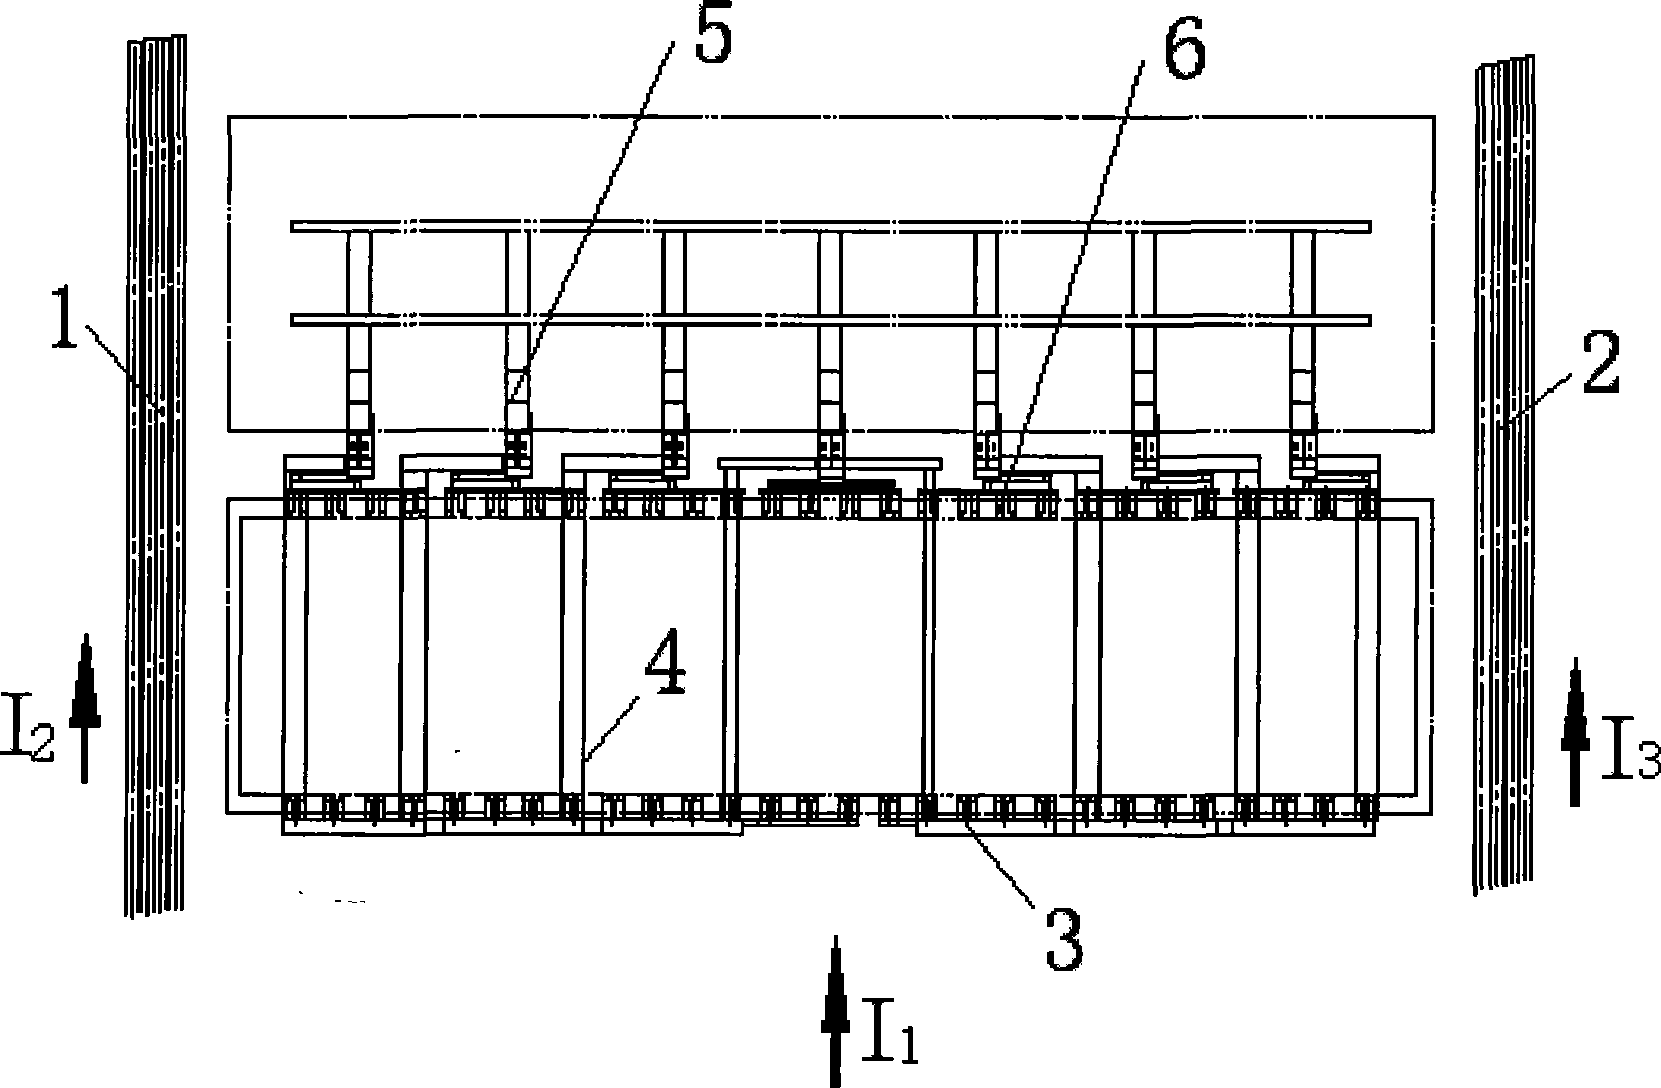 Aluminum cell bus-bar collocation structure including external compensation